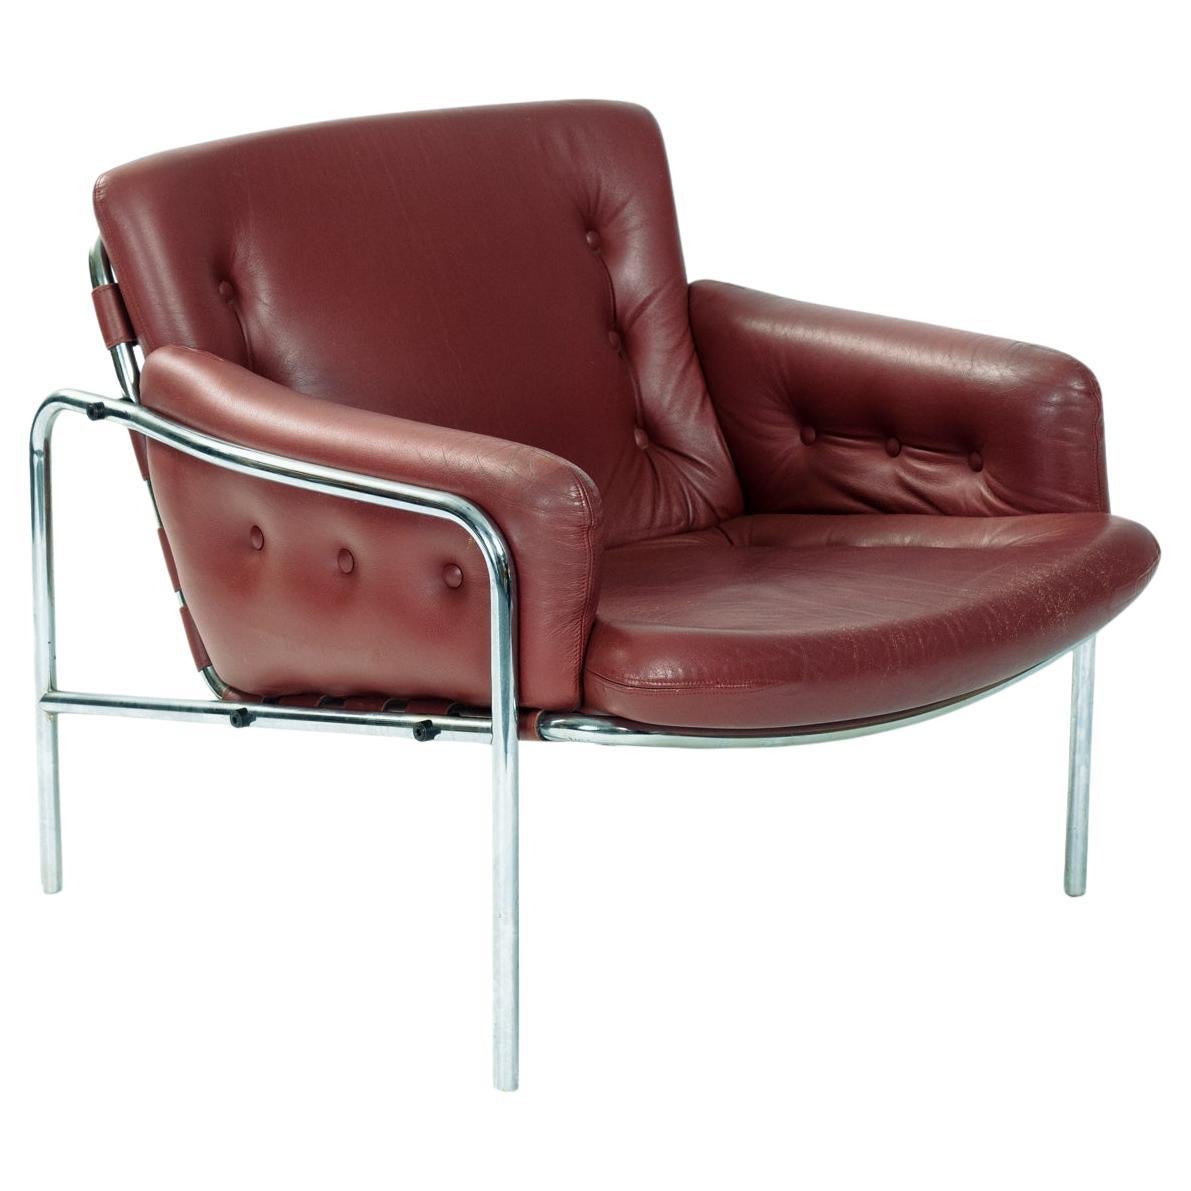 Dutch Martin Visser Osaka burgundy leather lounge chair by 't Spectrum, 1964 For Sale